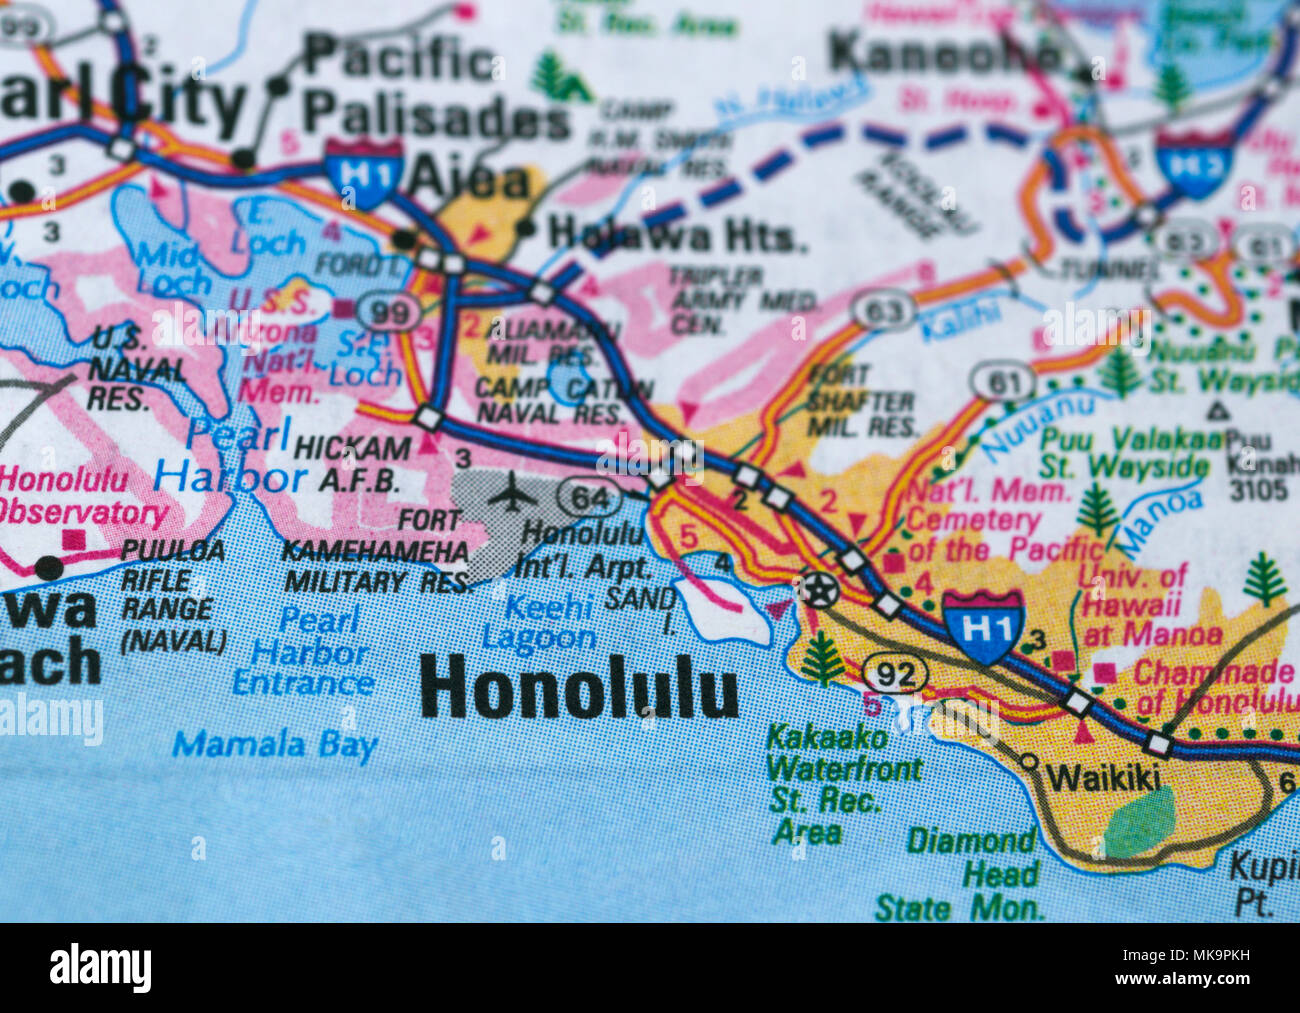 Honolulu city map Stock Photo - Alamy